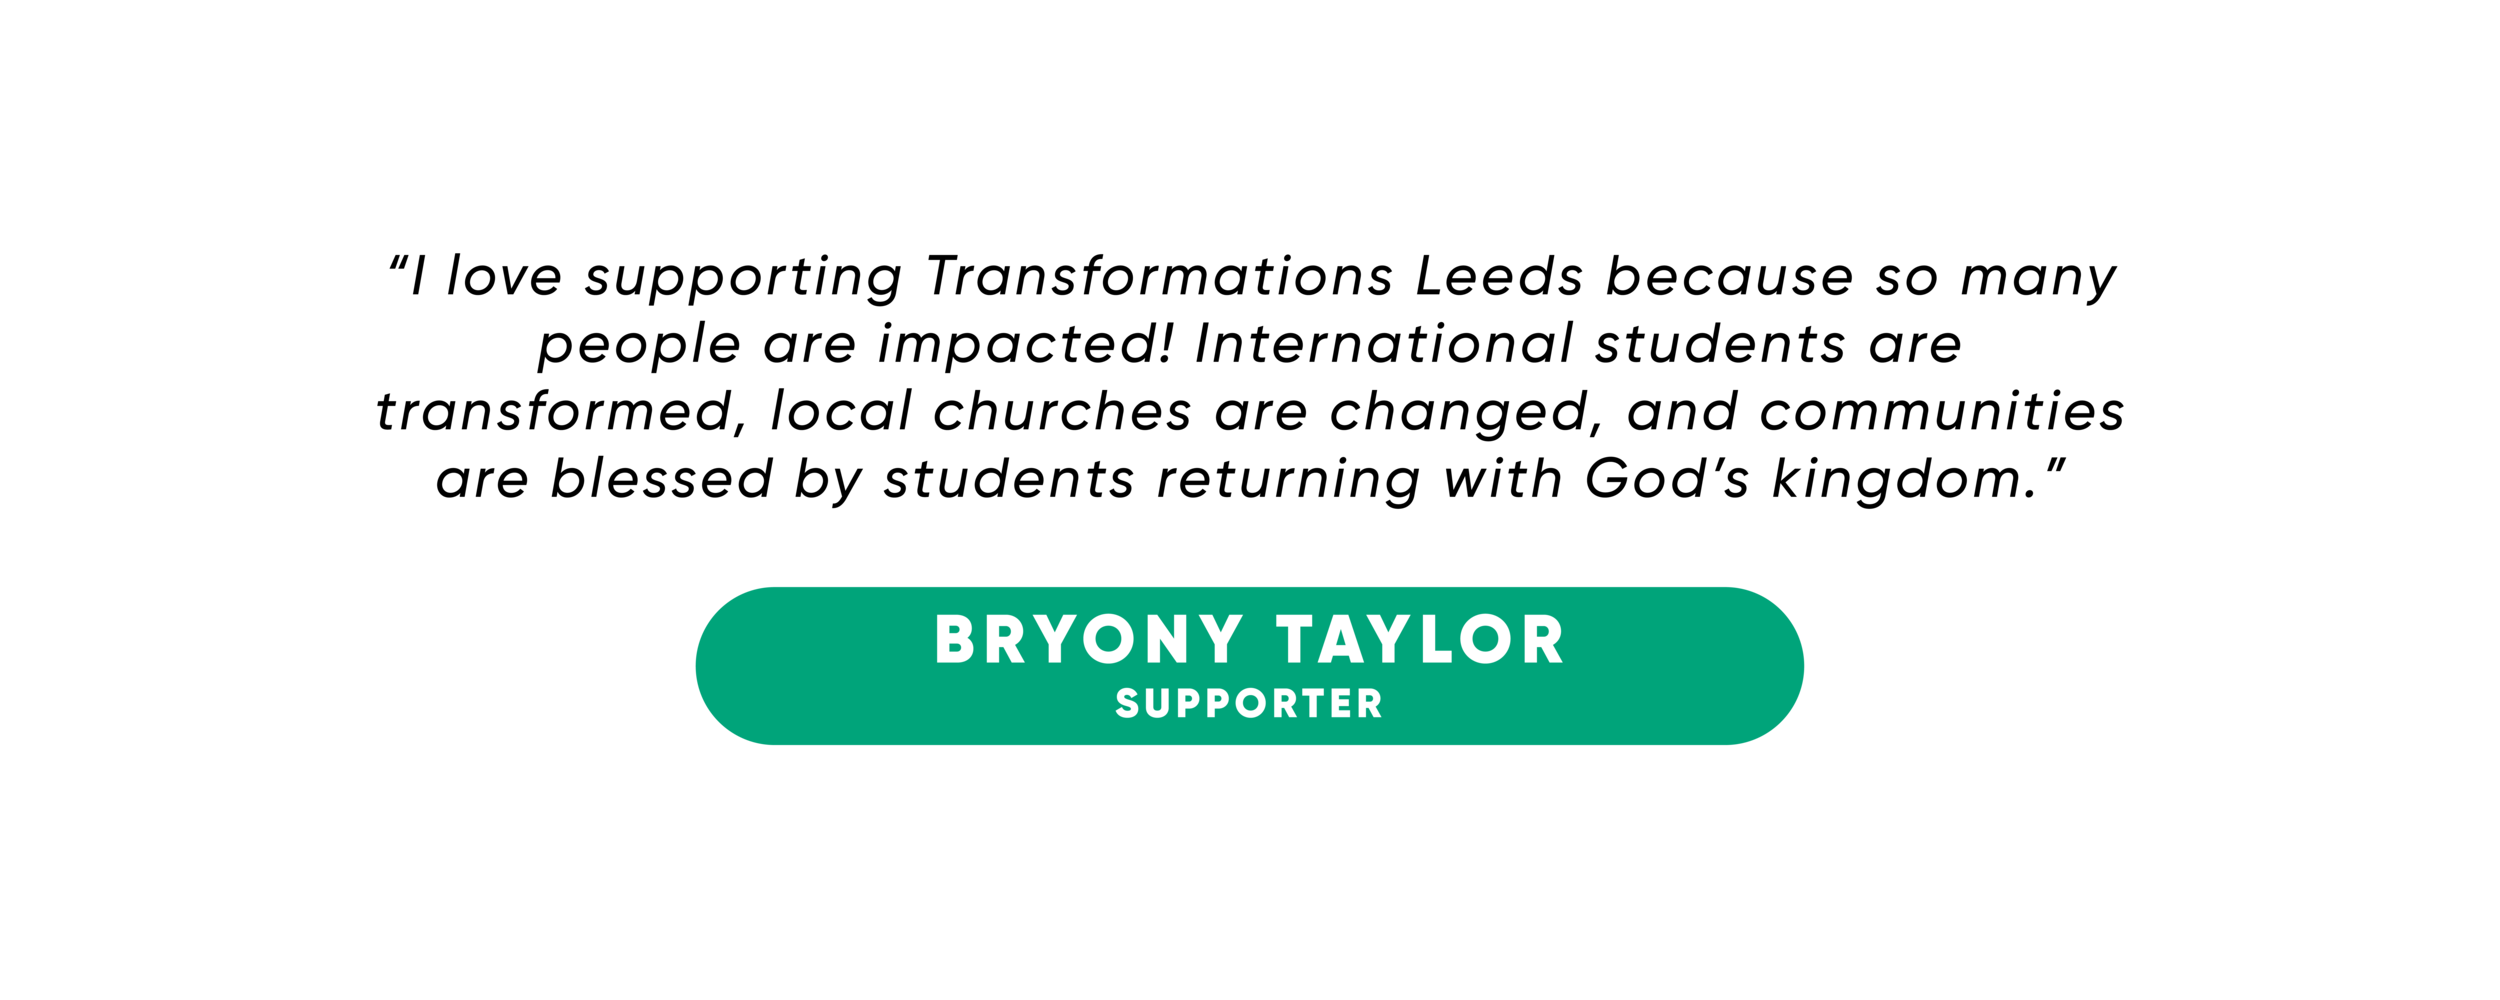 BRYONY TAYLOR.png